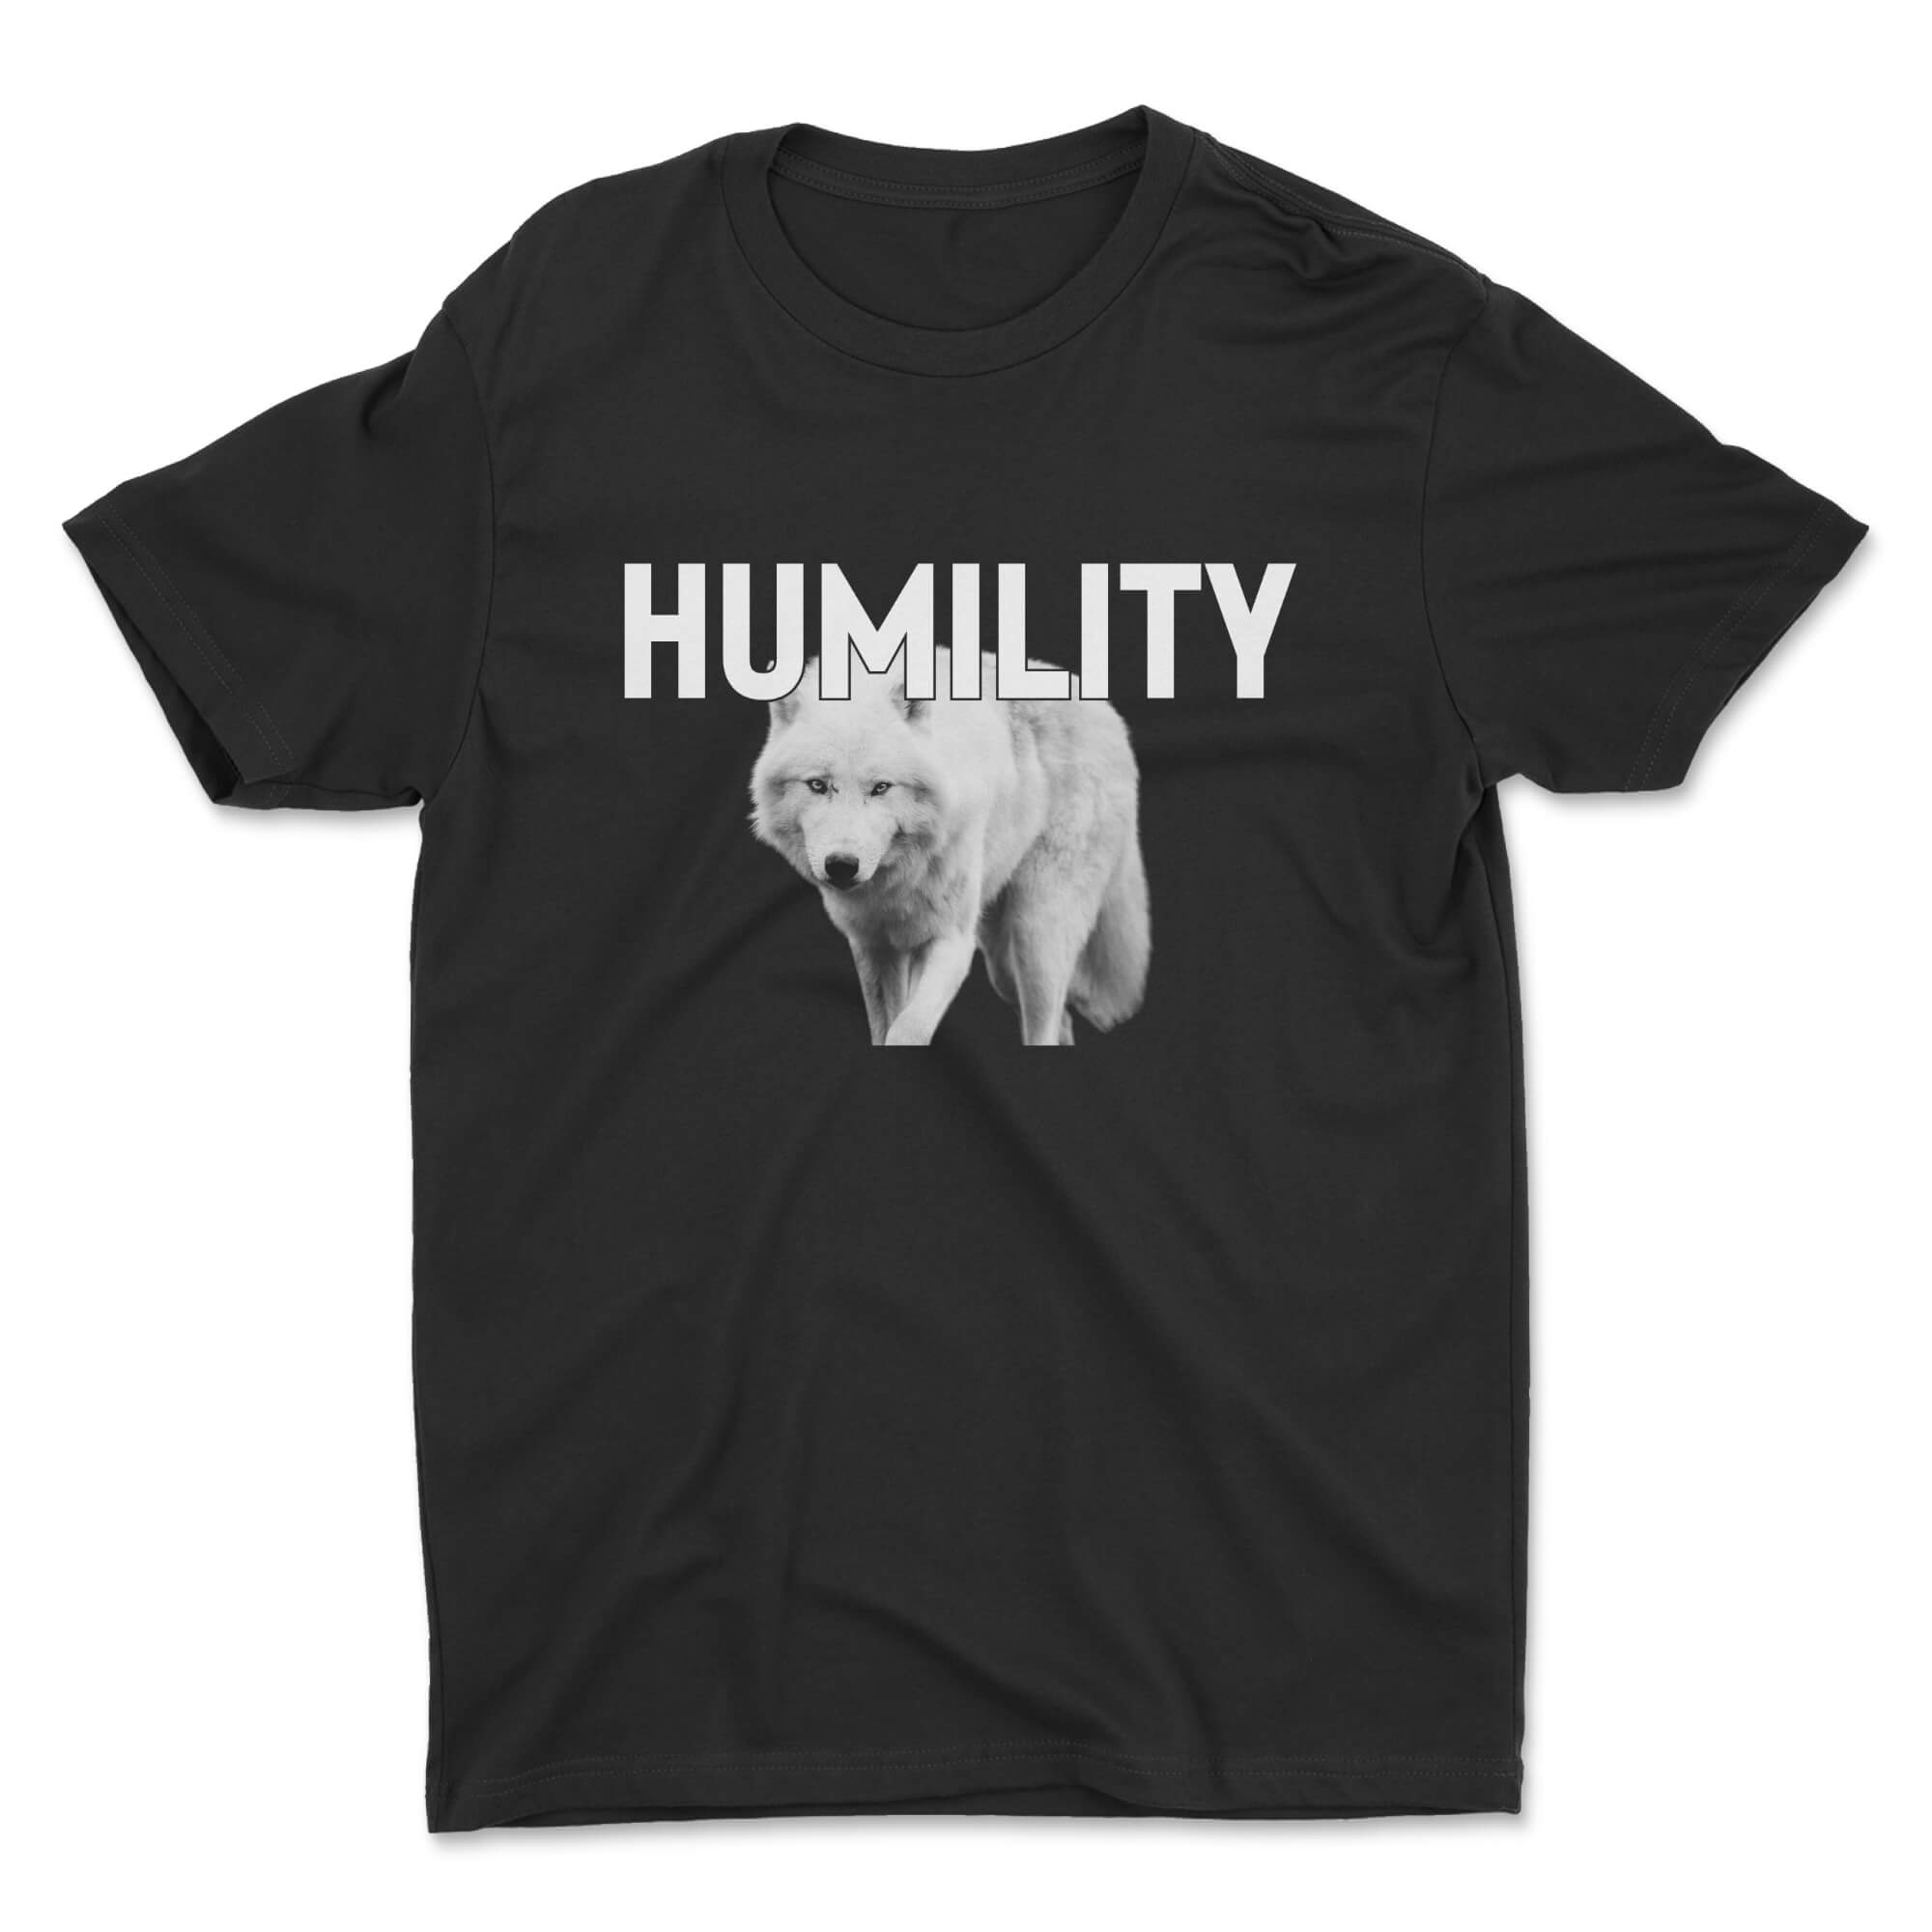 humility tee black